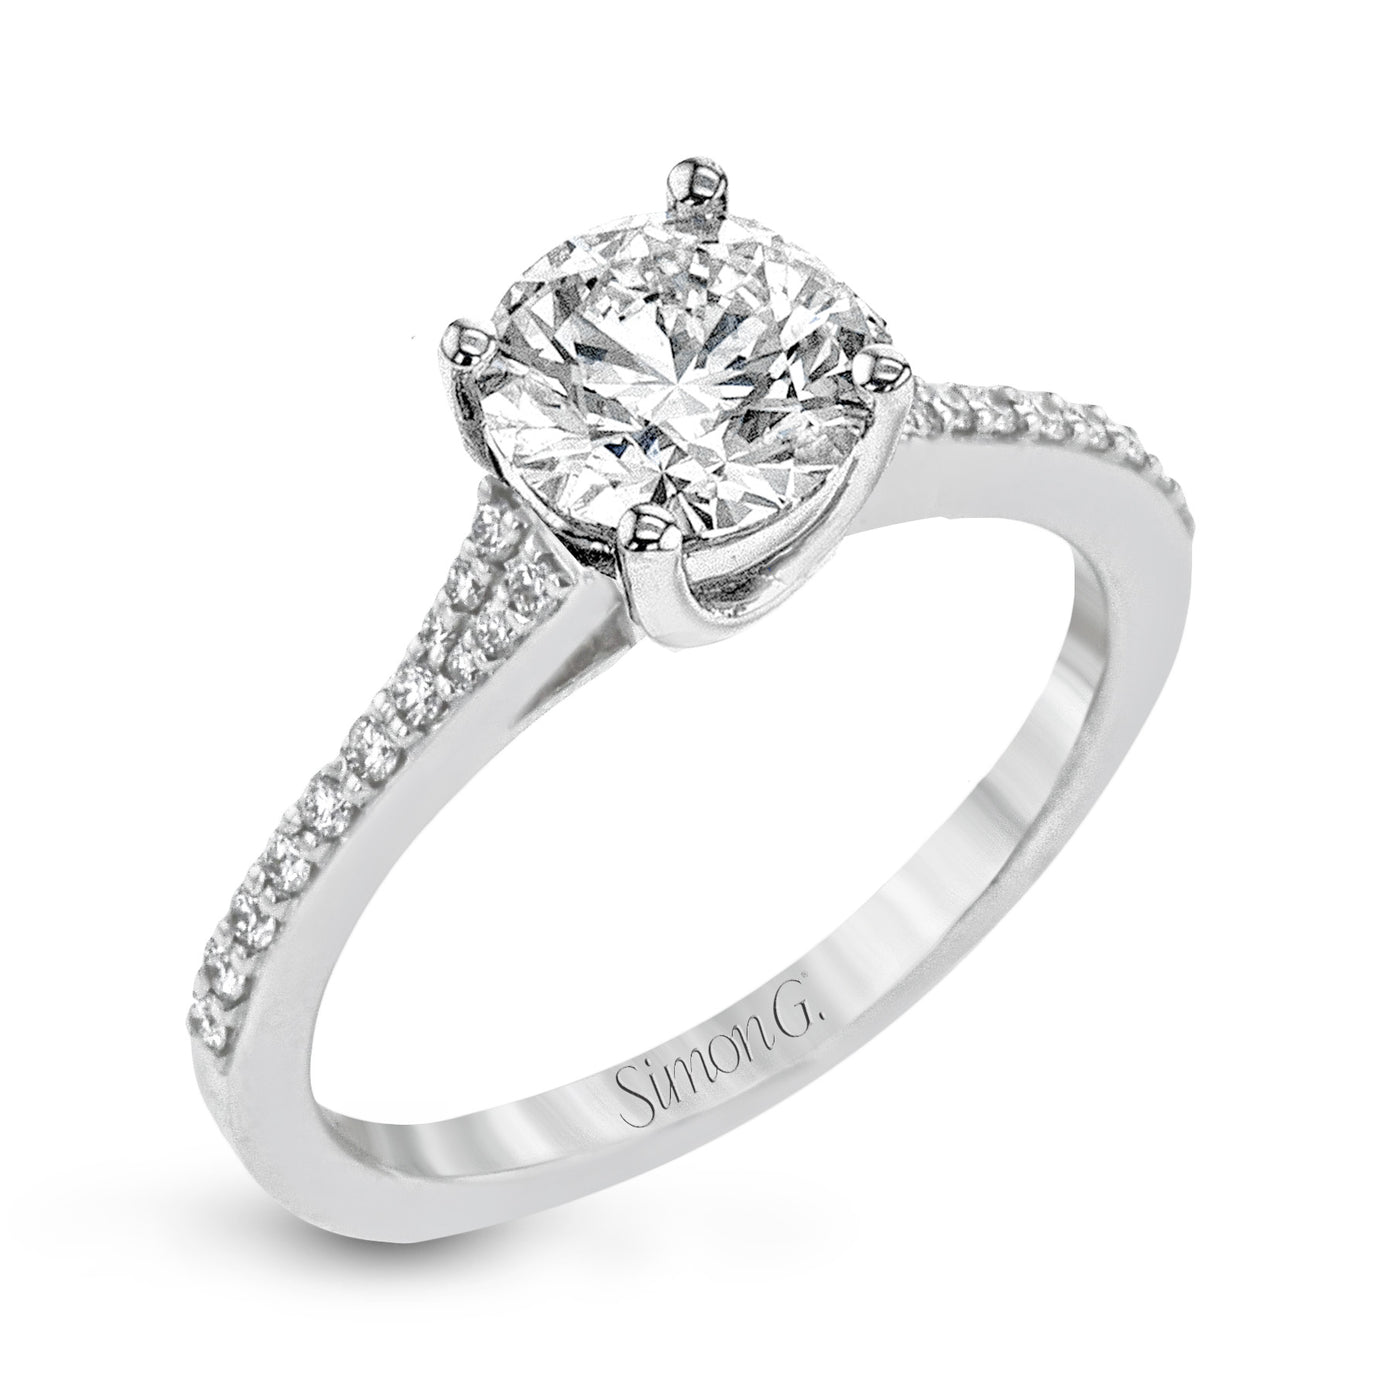 Simon G Jewelry 18 Karat White Gold Side Stones Round Diamond Engagement Ring LR2507-RD